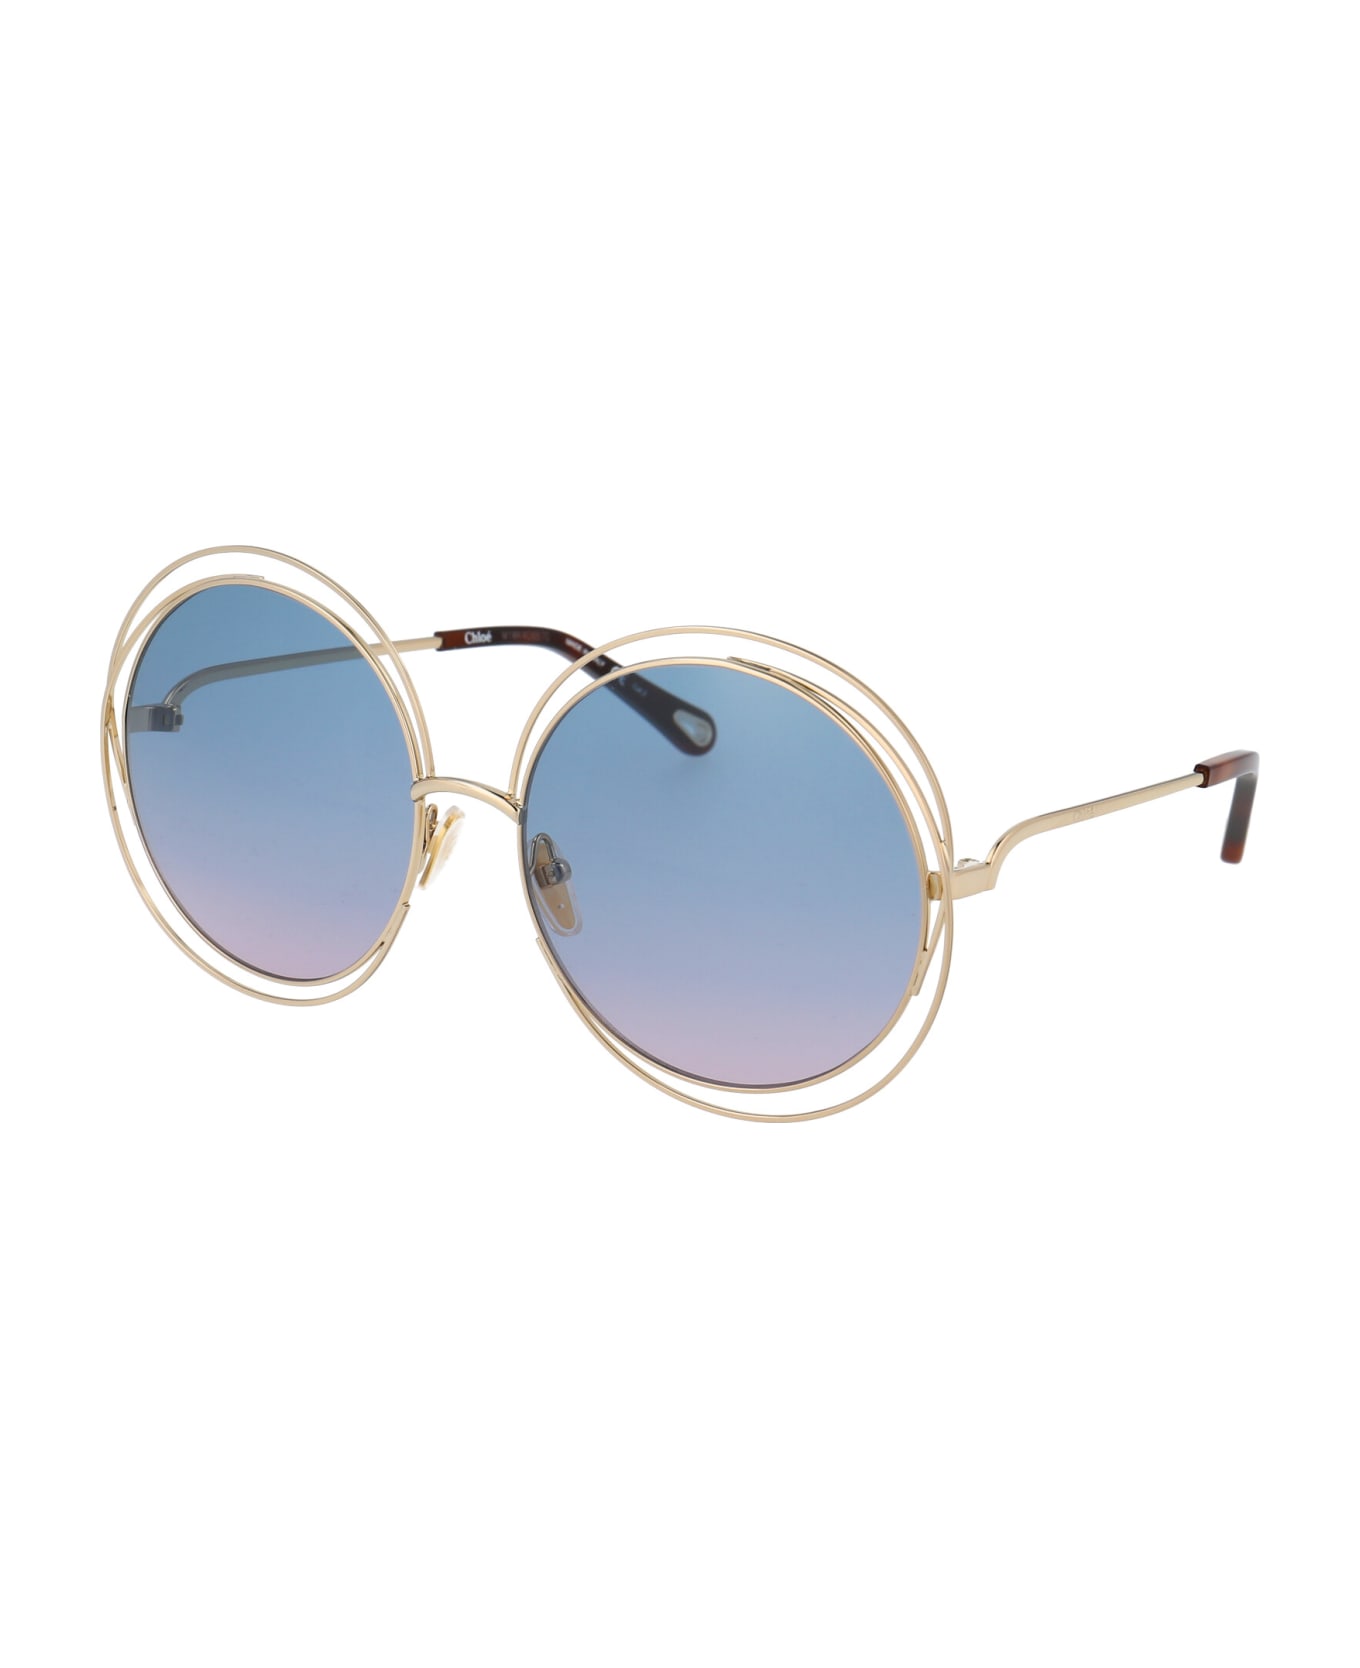 Chloé Eyewear Ch0045s Sunglasses - 003 GOLD GOLD BLUE